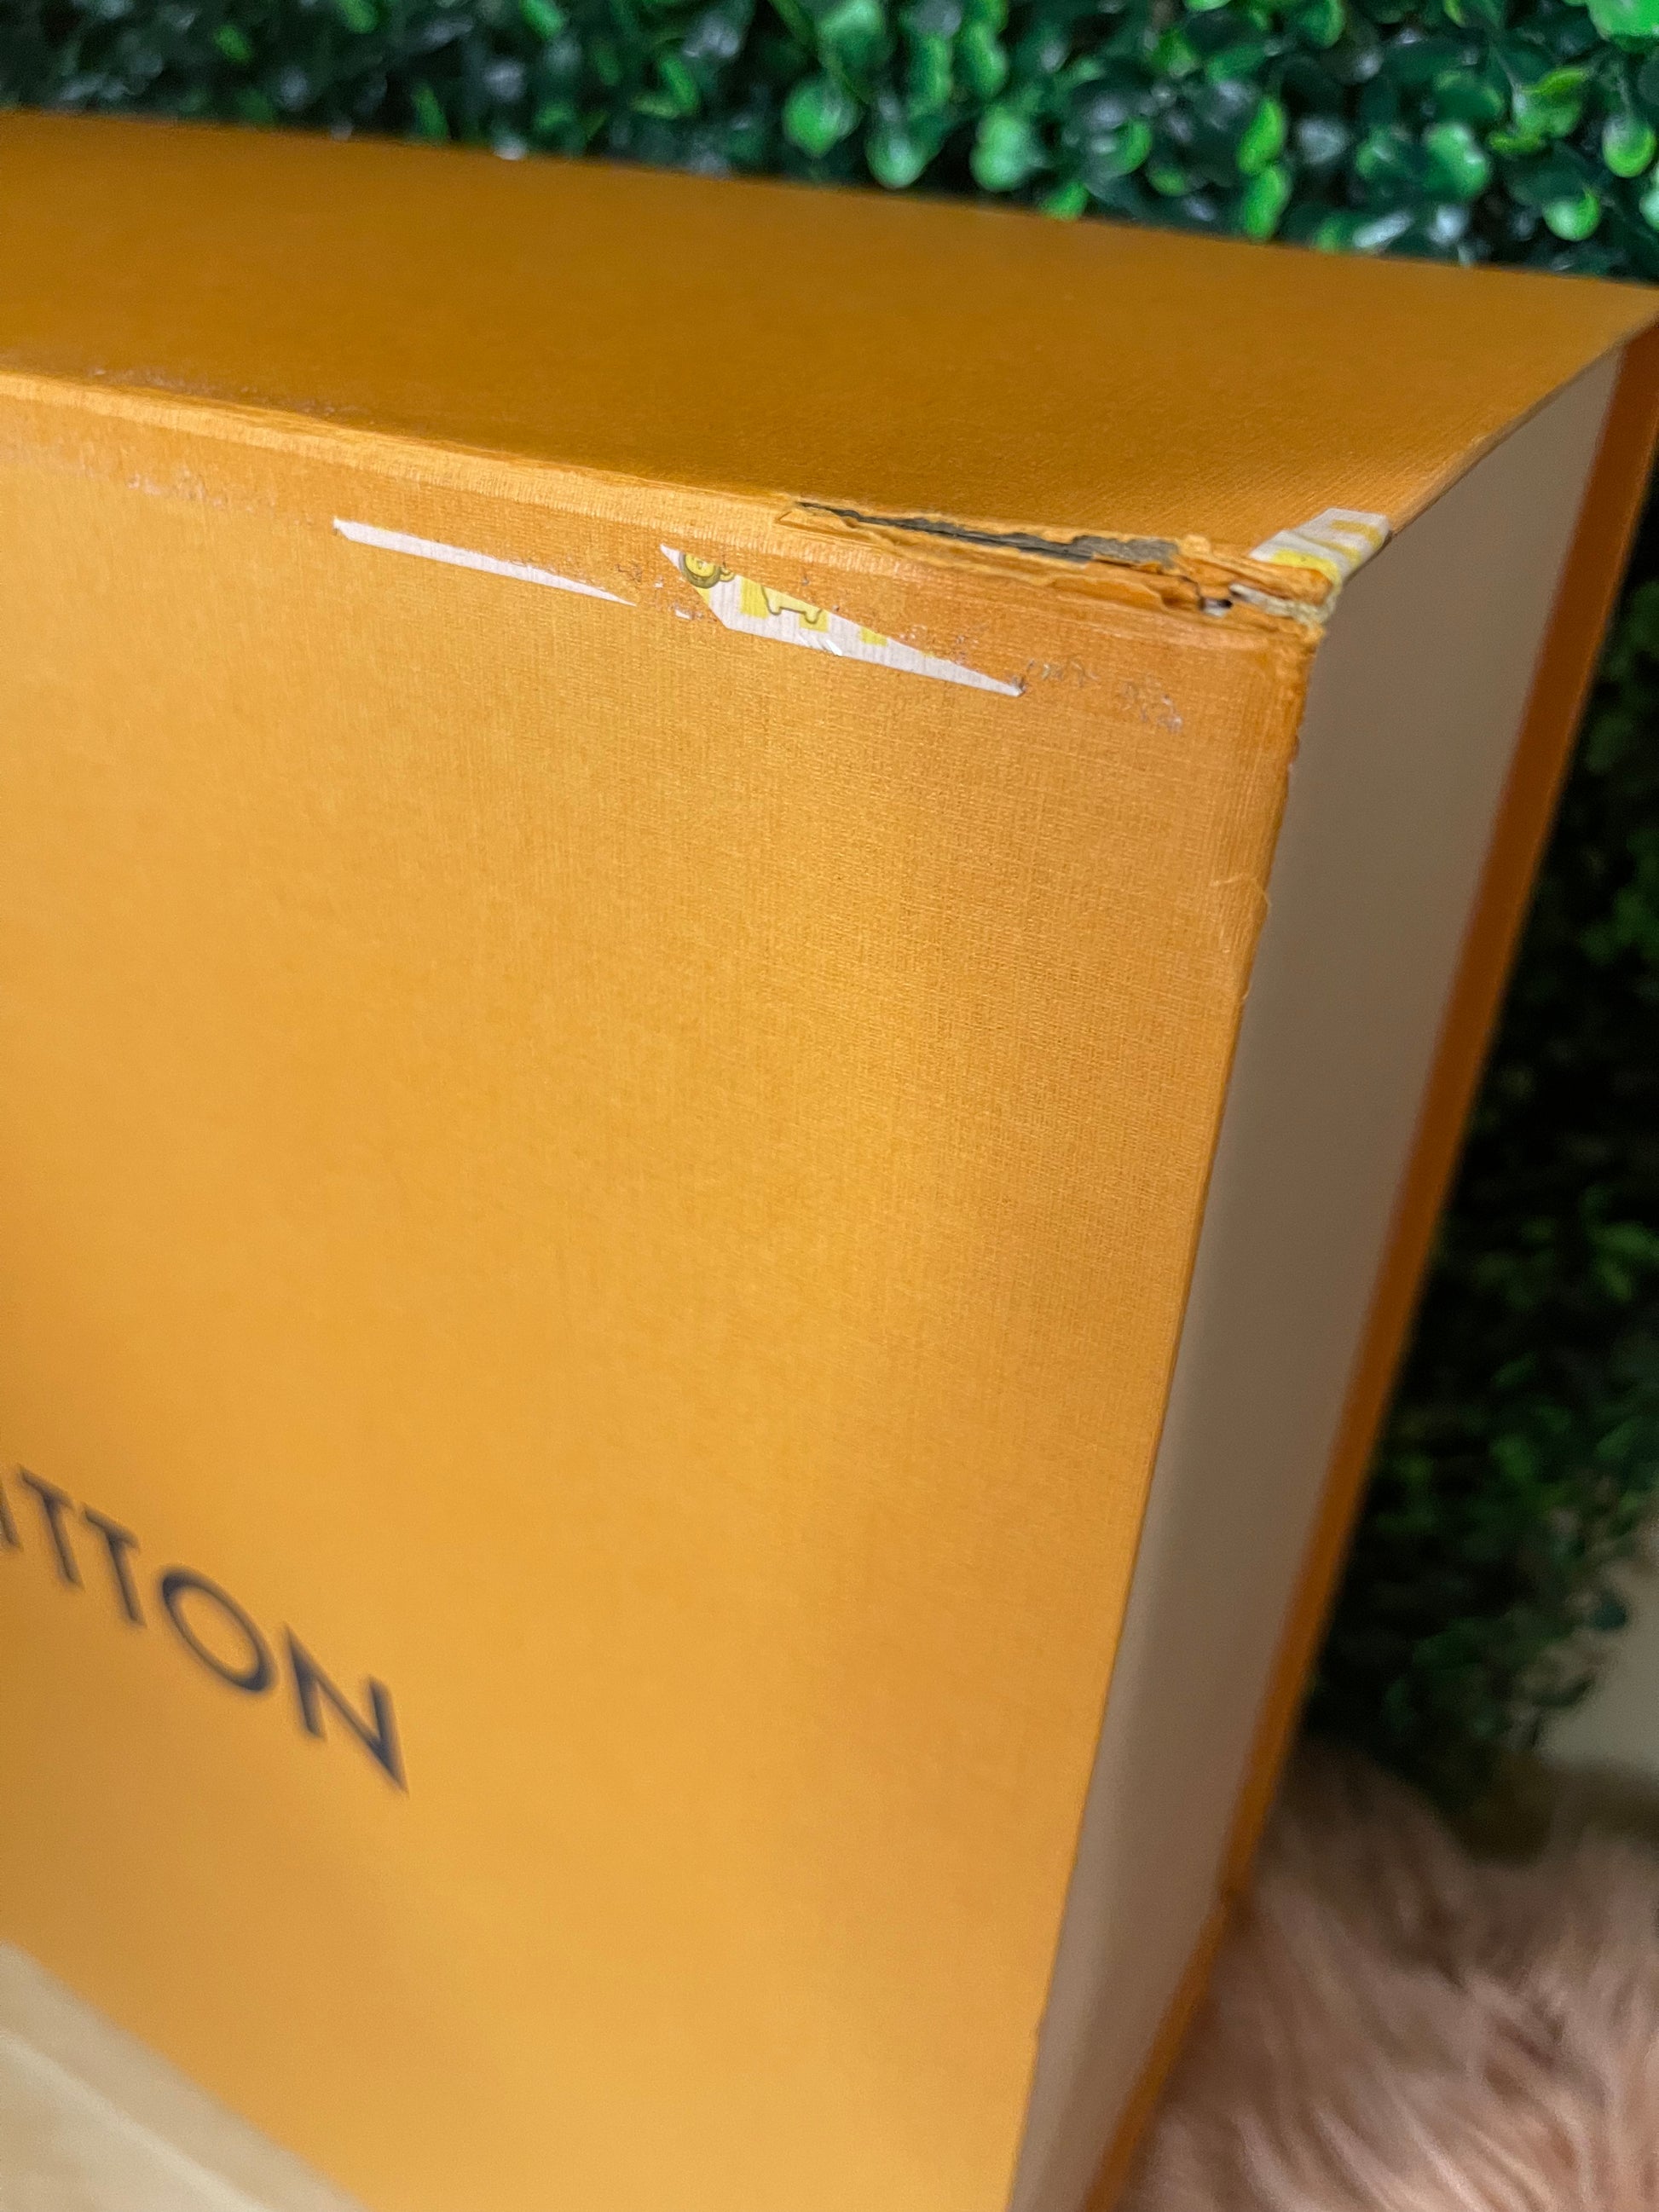 Box Opening - Louis Vuitton Neverfull 